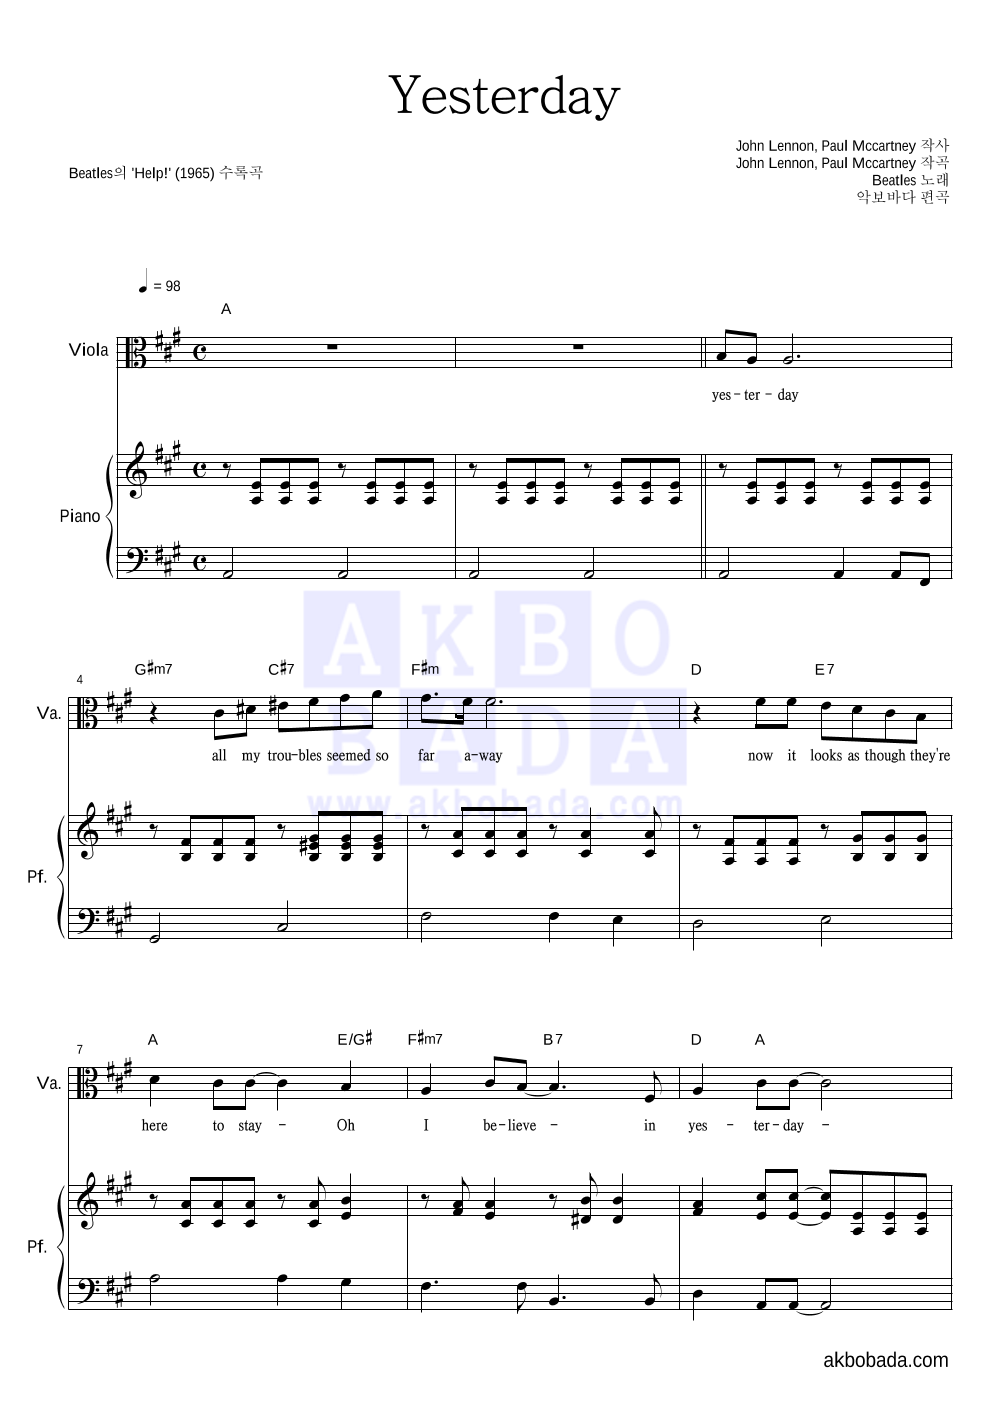 Beatles - Yesterday 비올라&피아노 악보 